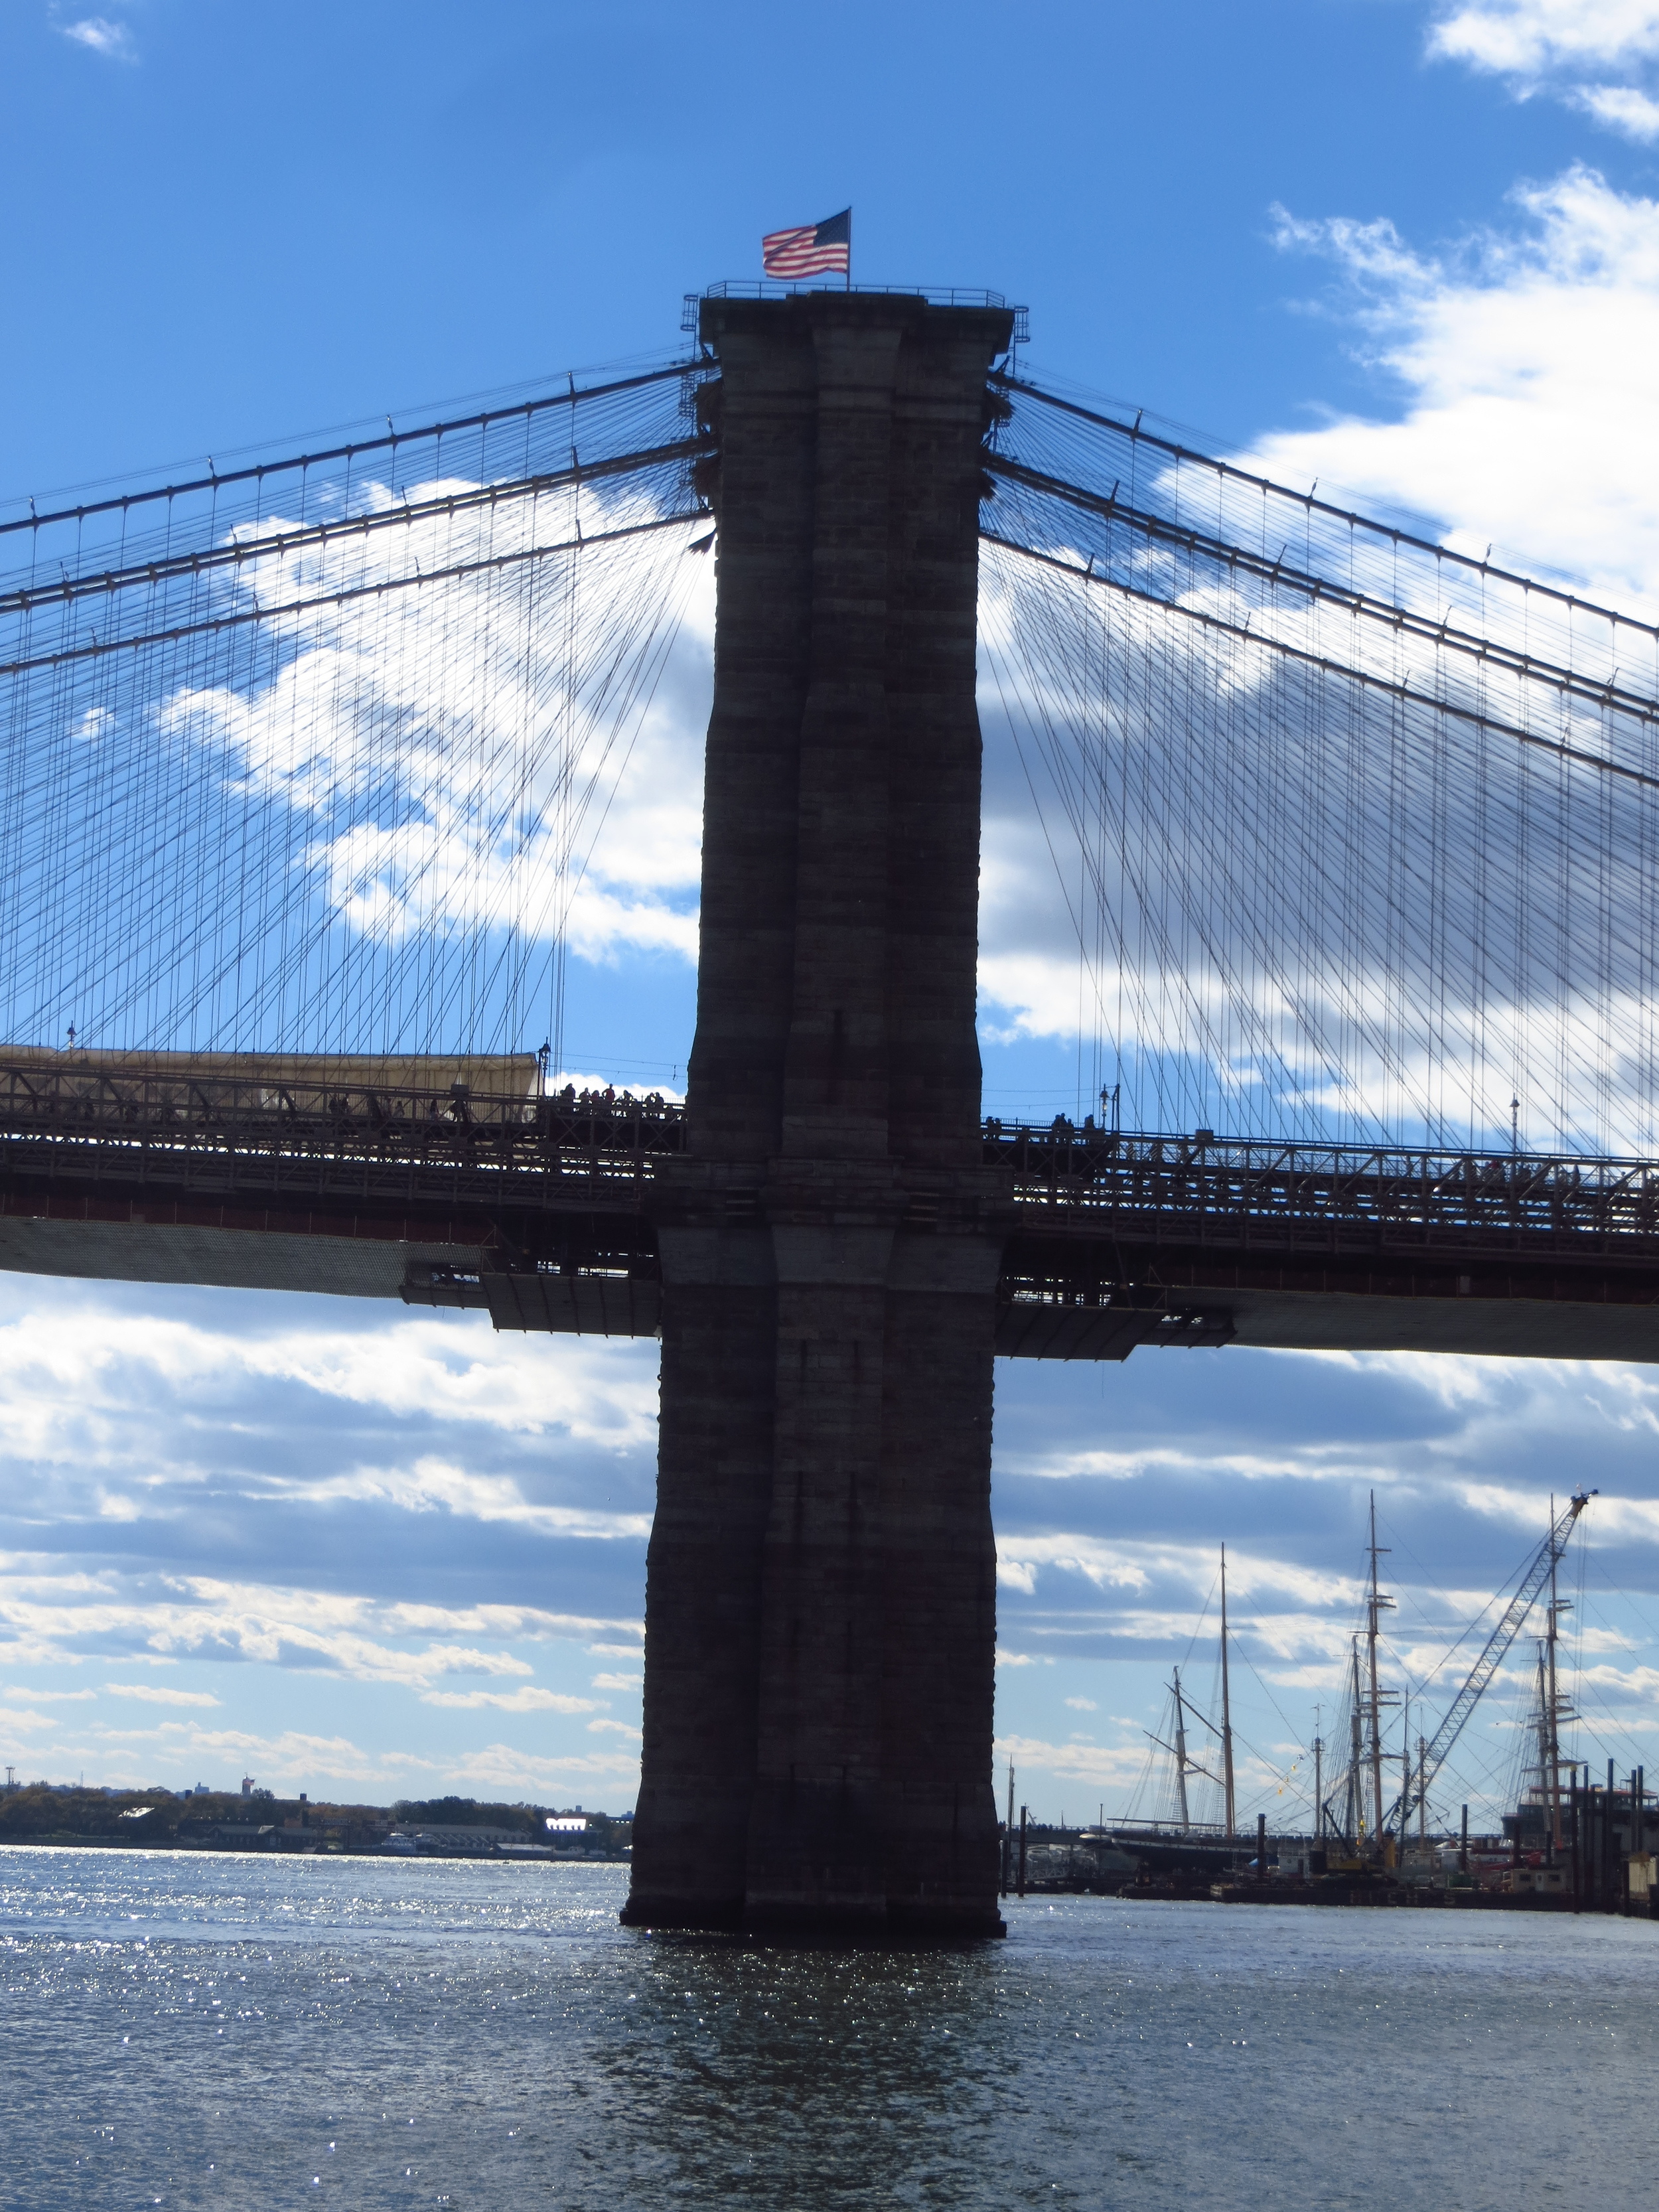 Even more Brooklyn Bridge